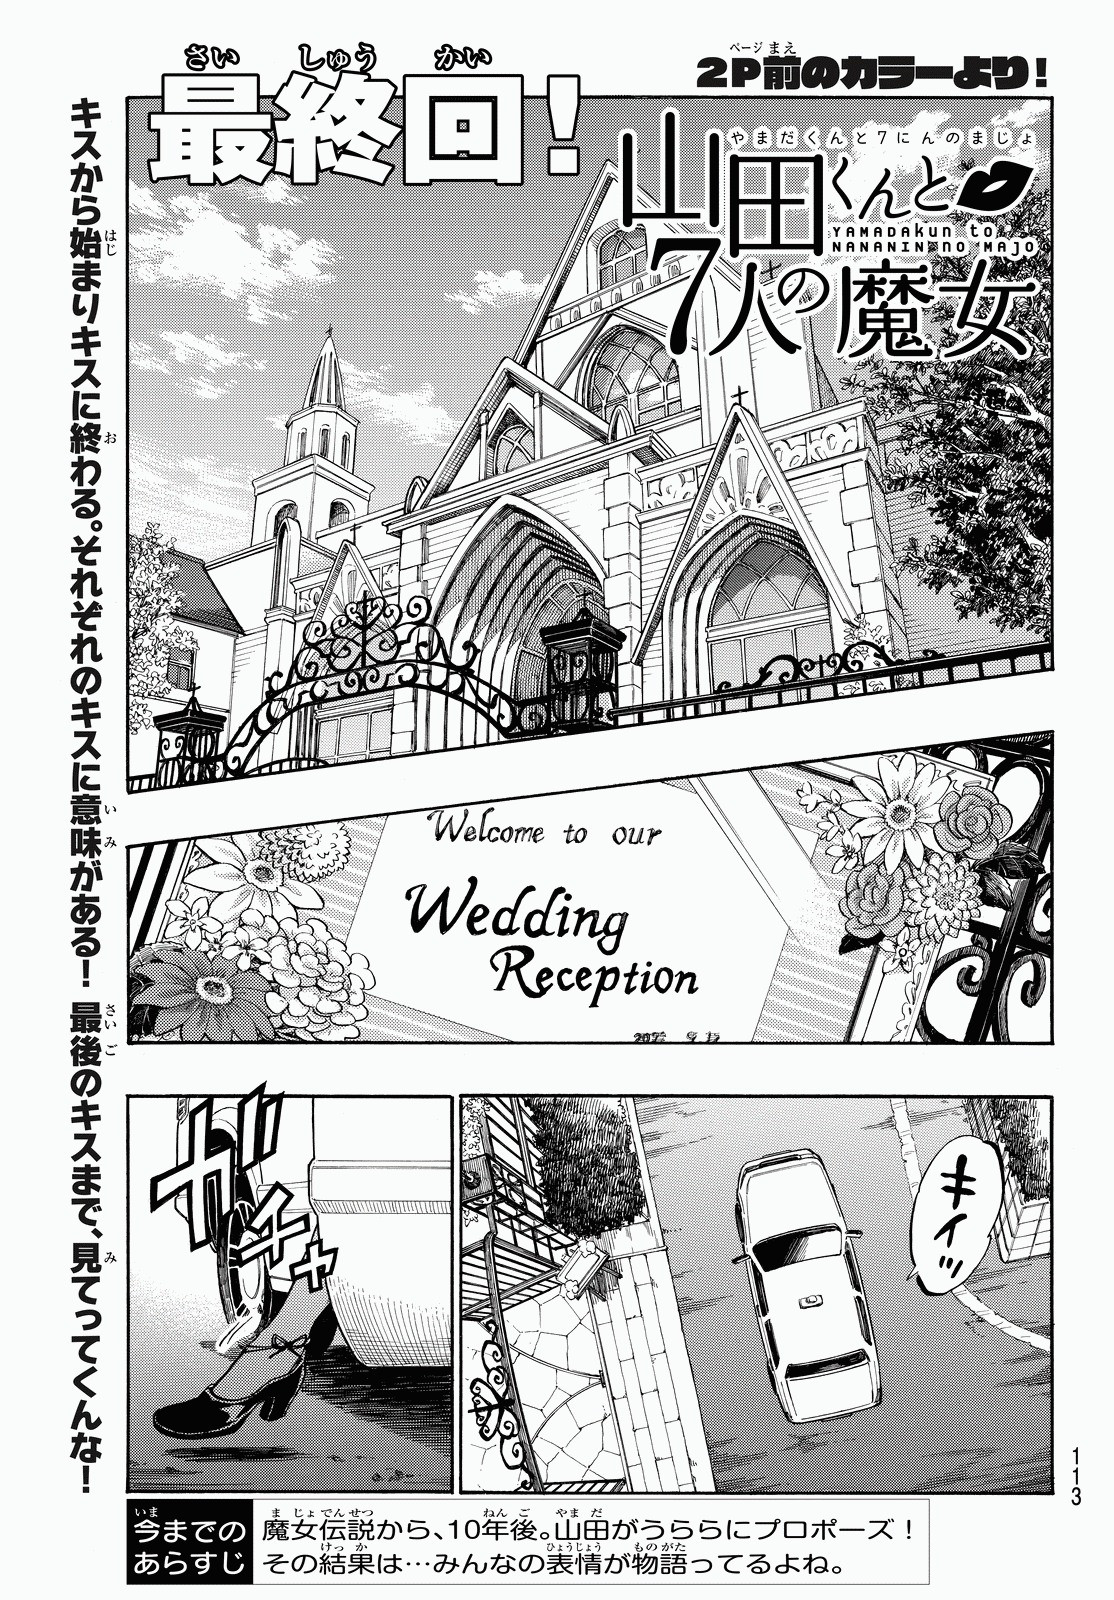 Yamada-kun to 7-nin no Majo - Chapter Final - Page 3